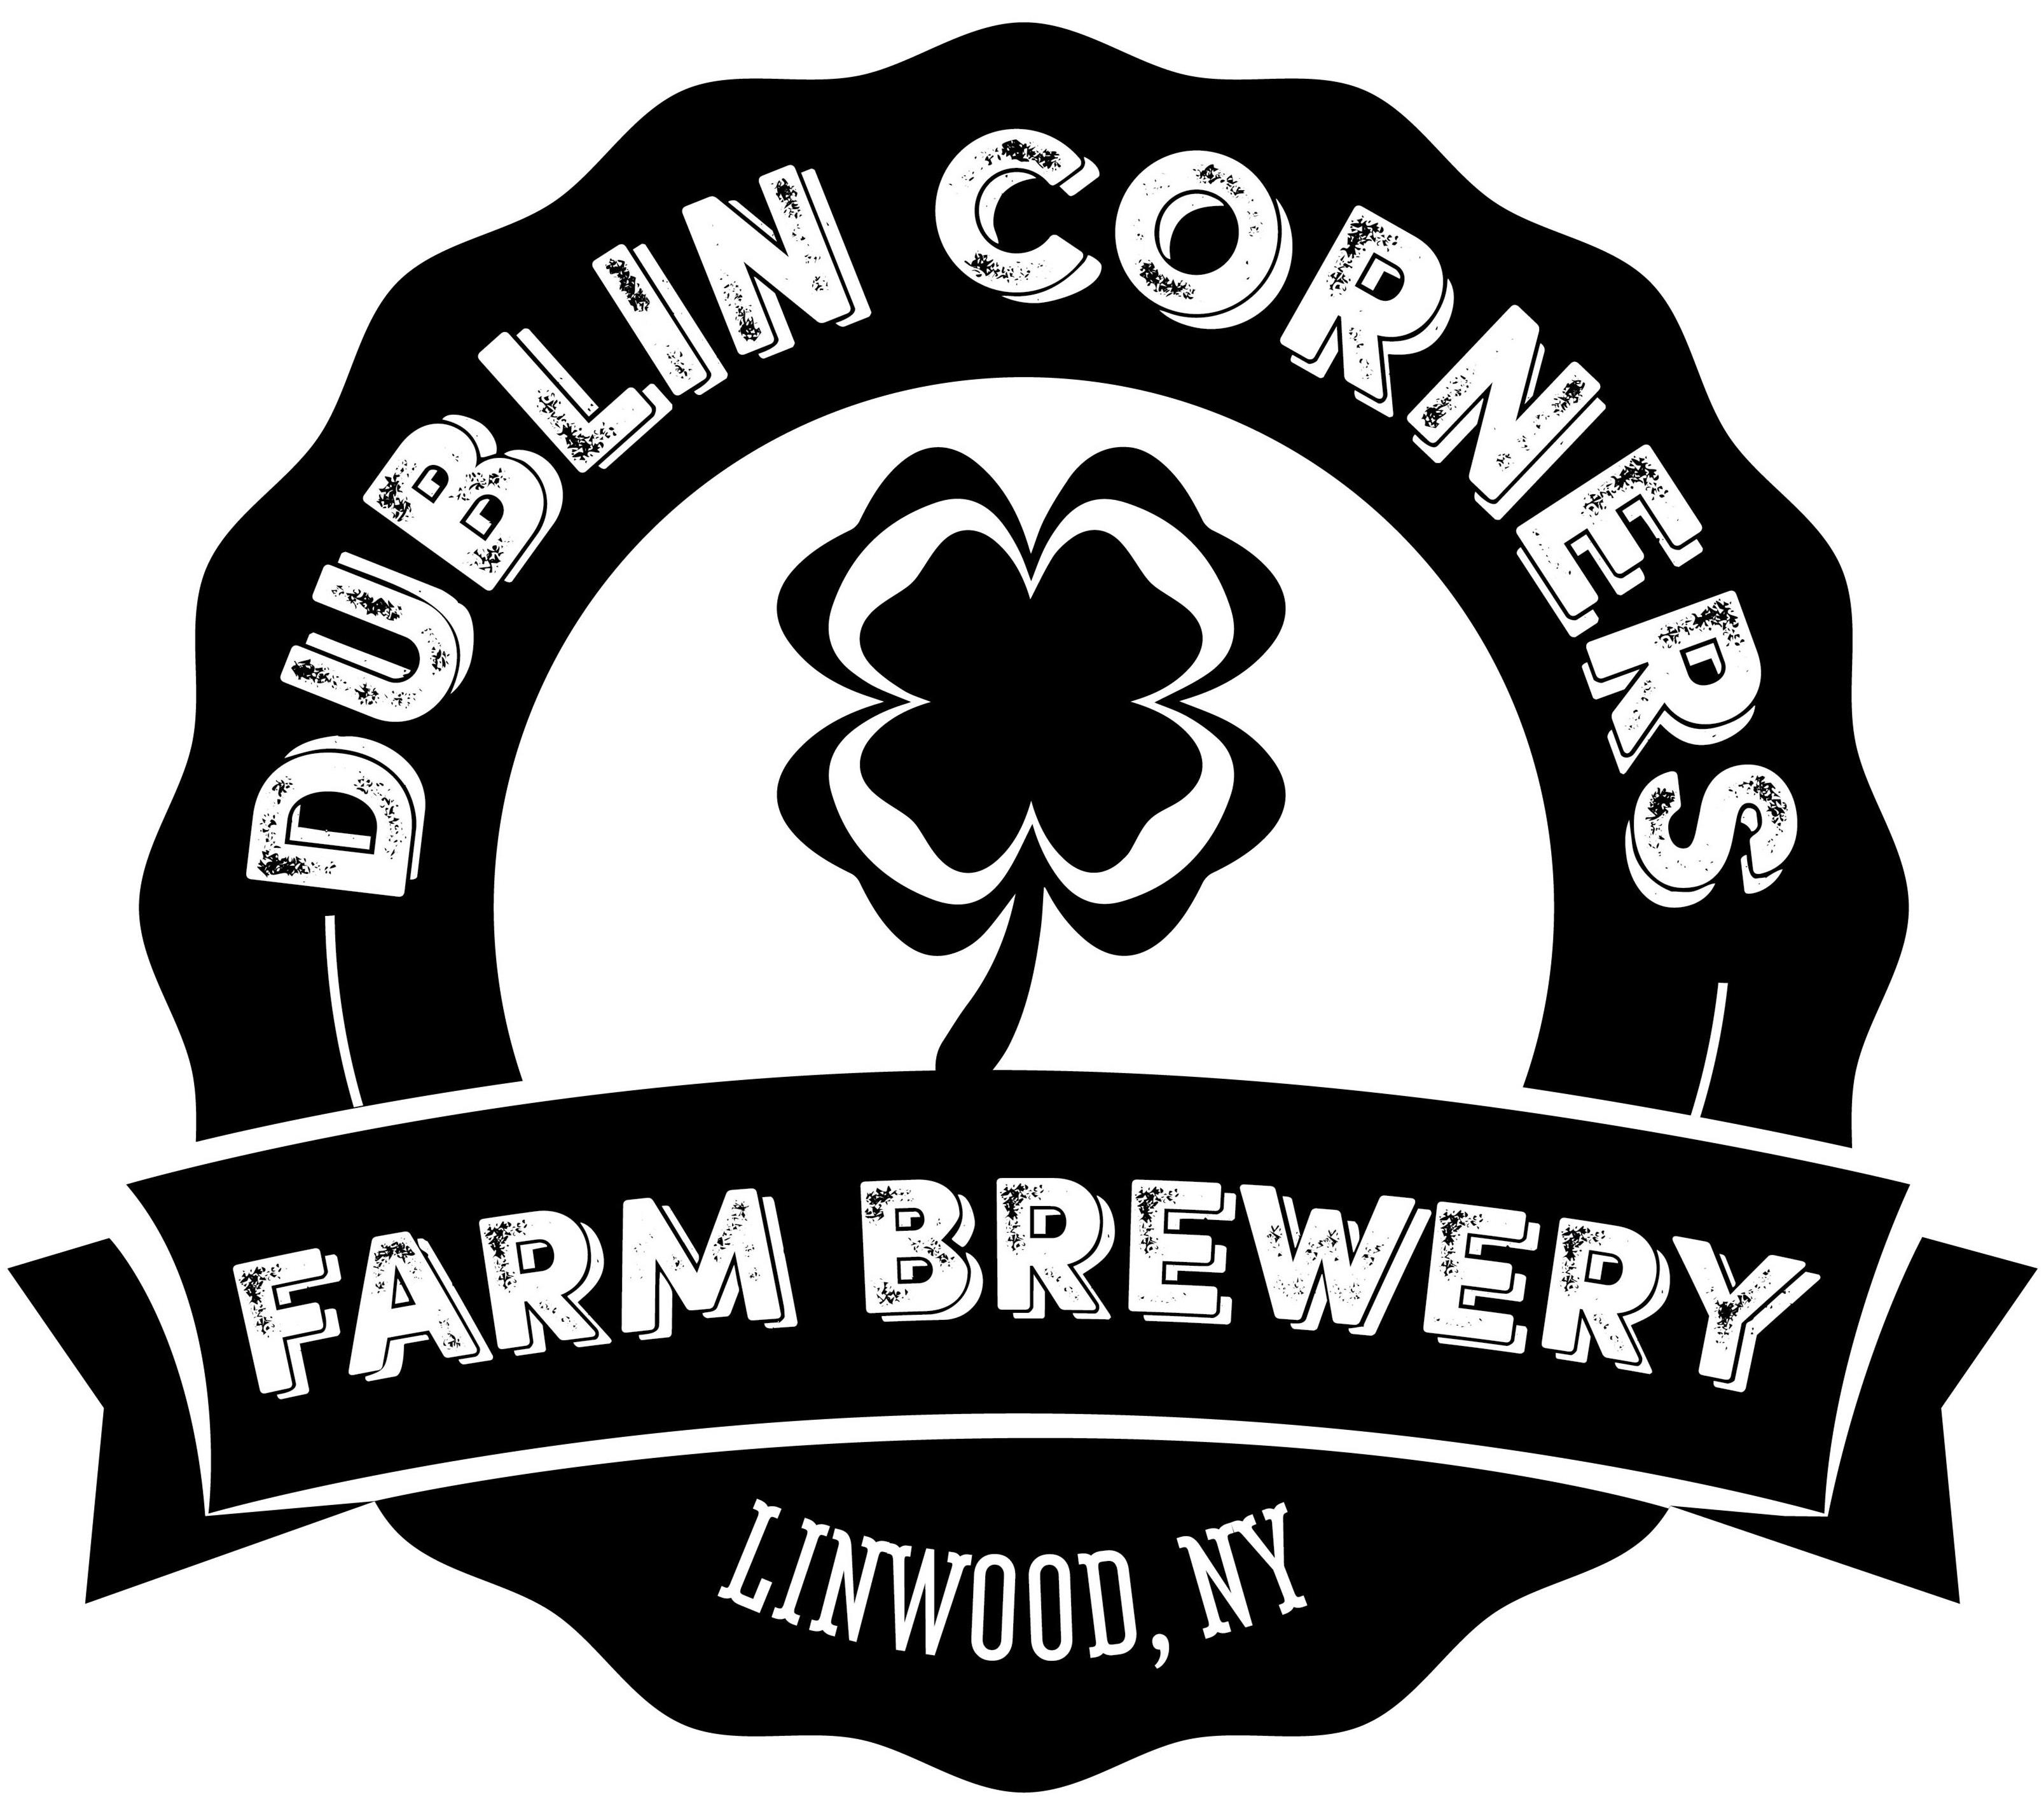  DUBLIN CORNERS FARM BREWERY LINWOOD, NY